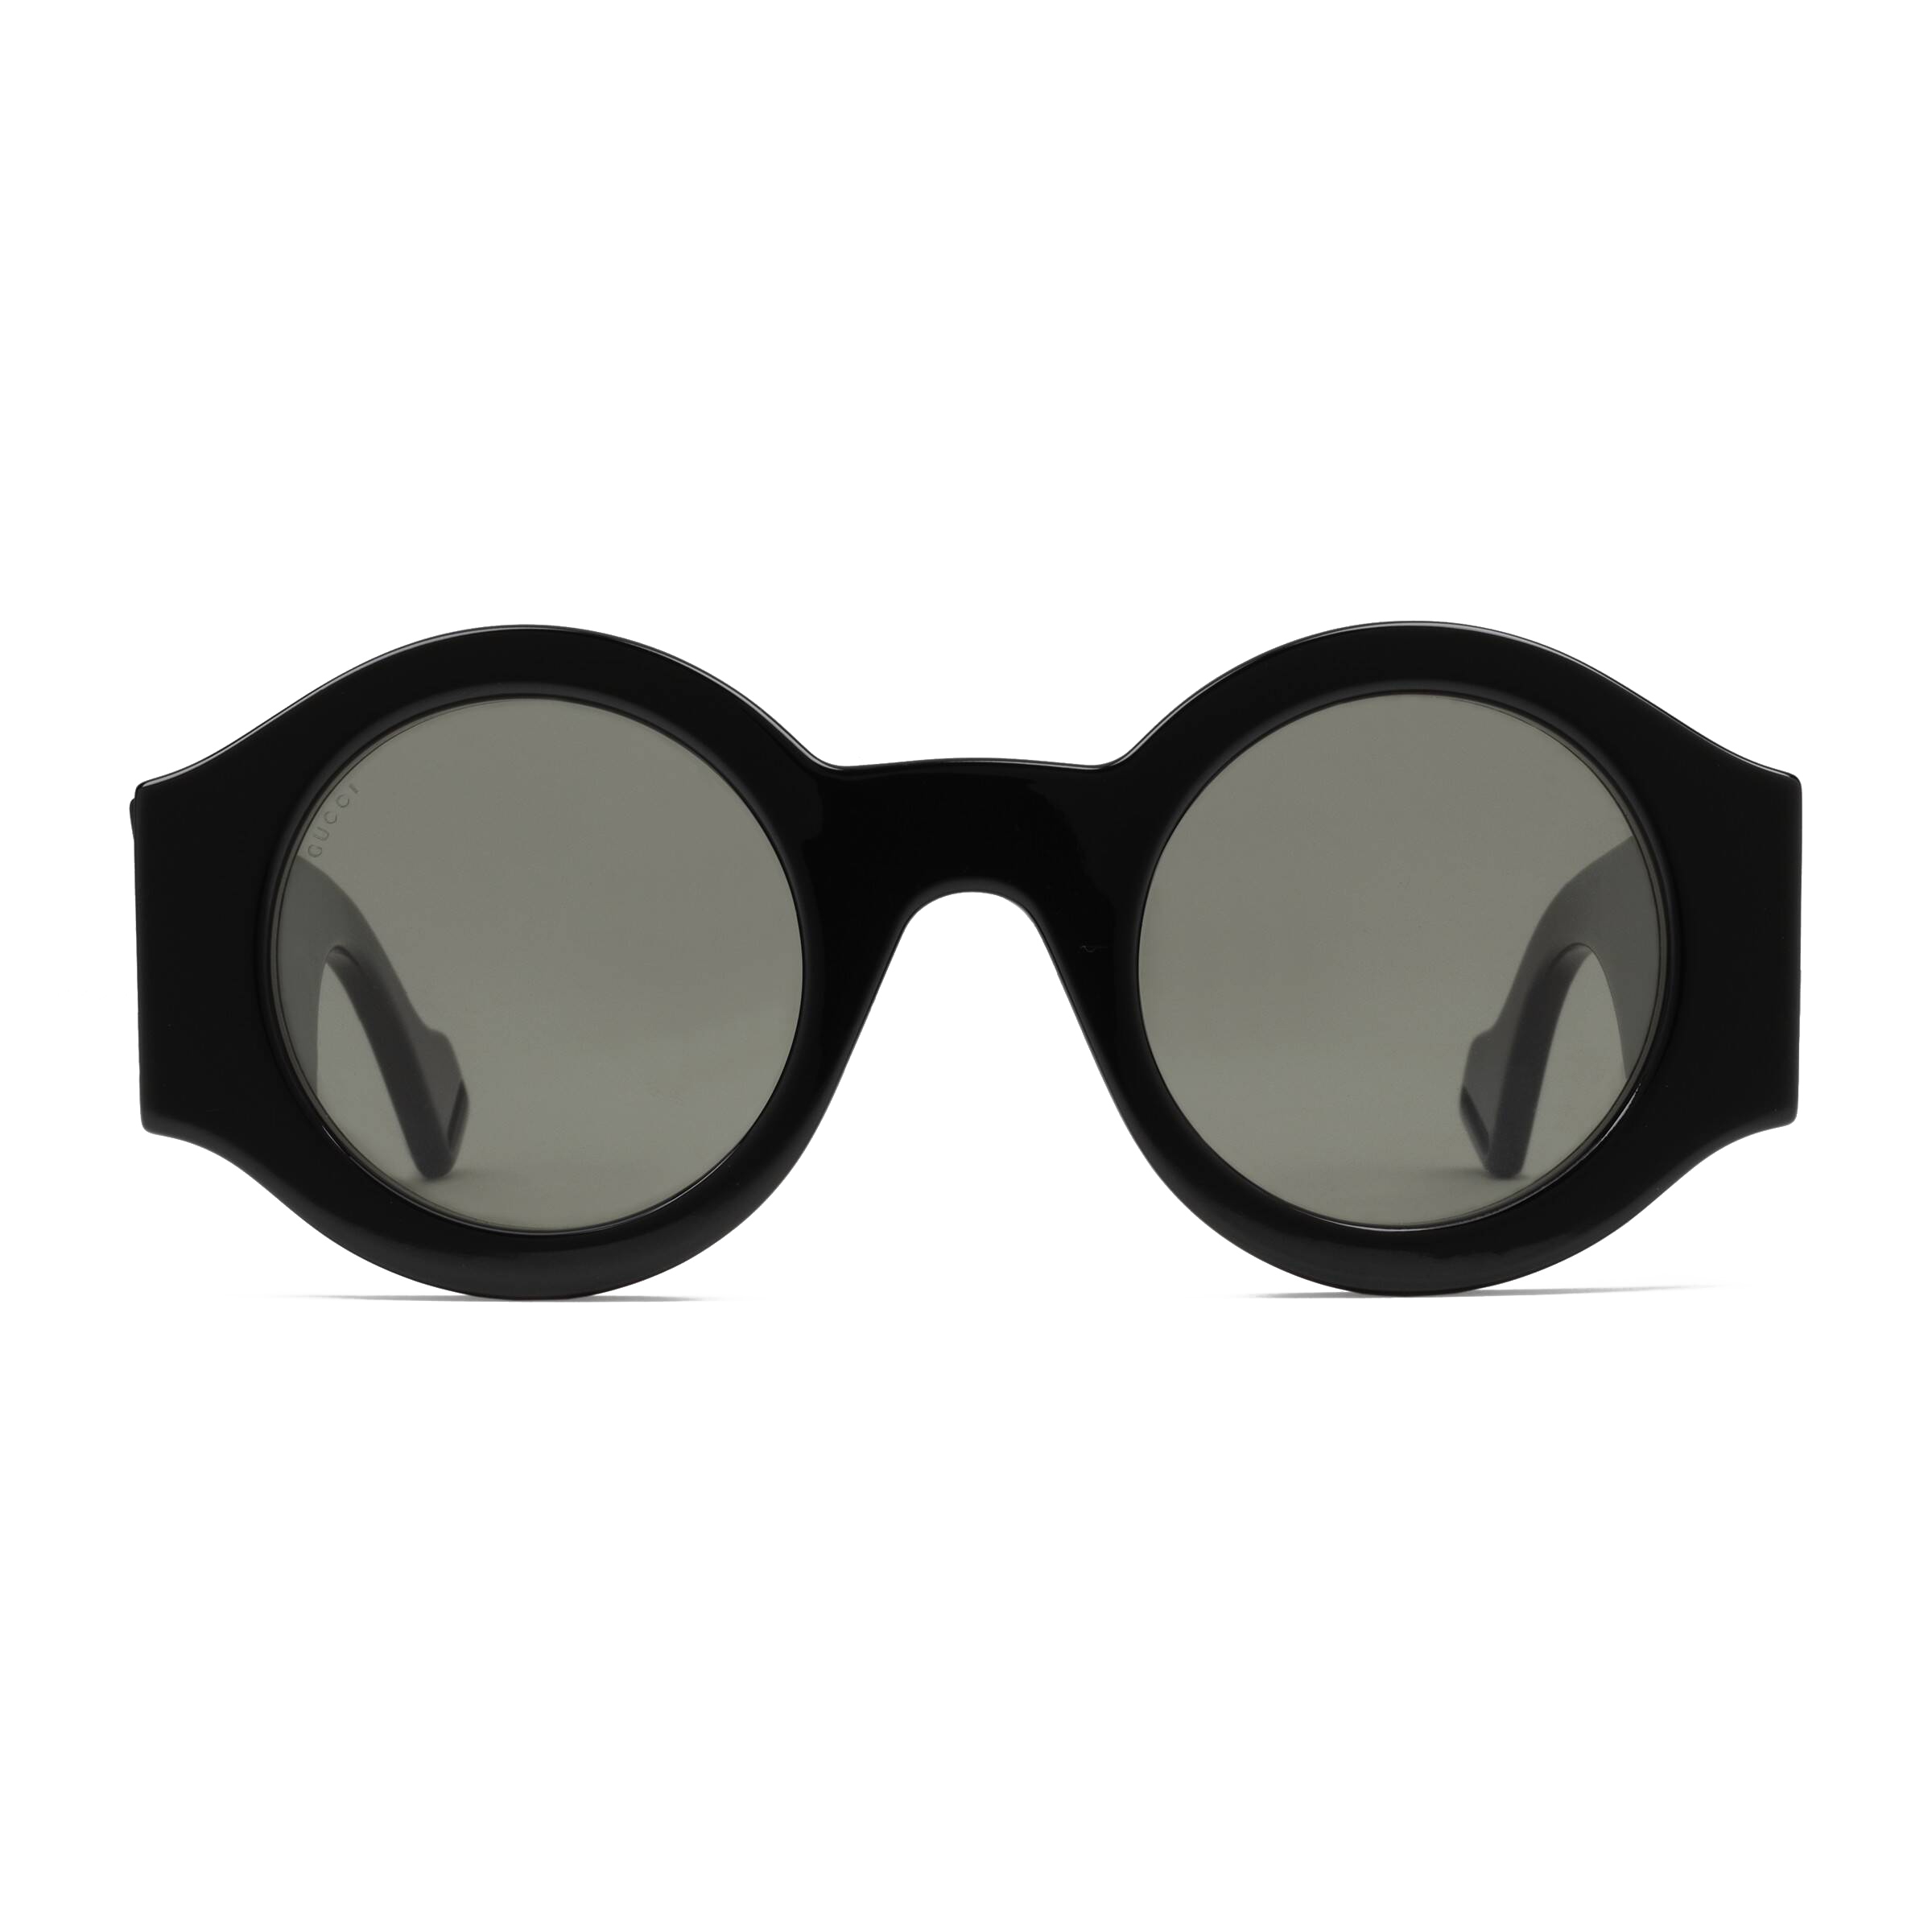 Gucci - Round Frame Acetate Sunglasses - Black - Gucci Eyewear - Avvenice